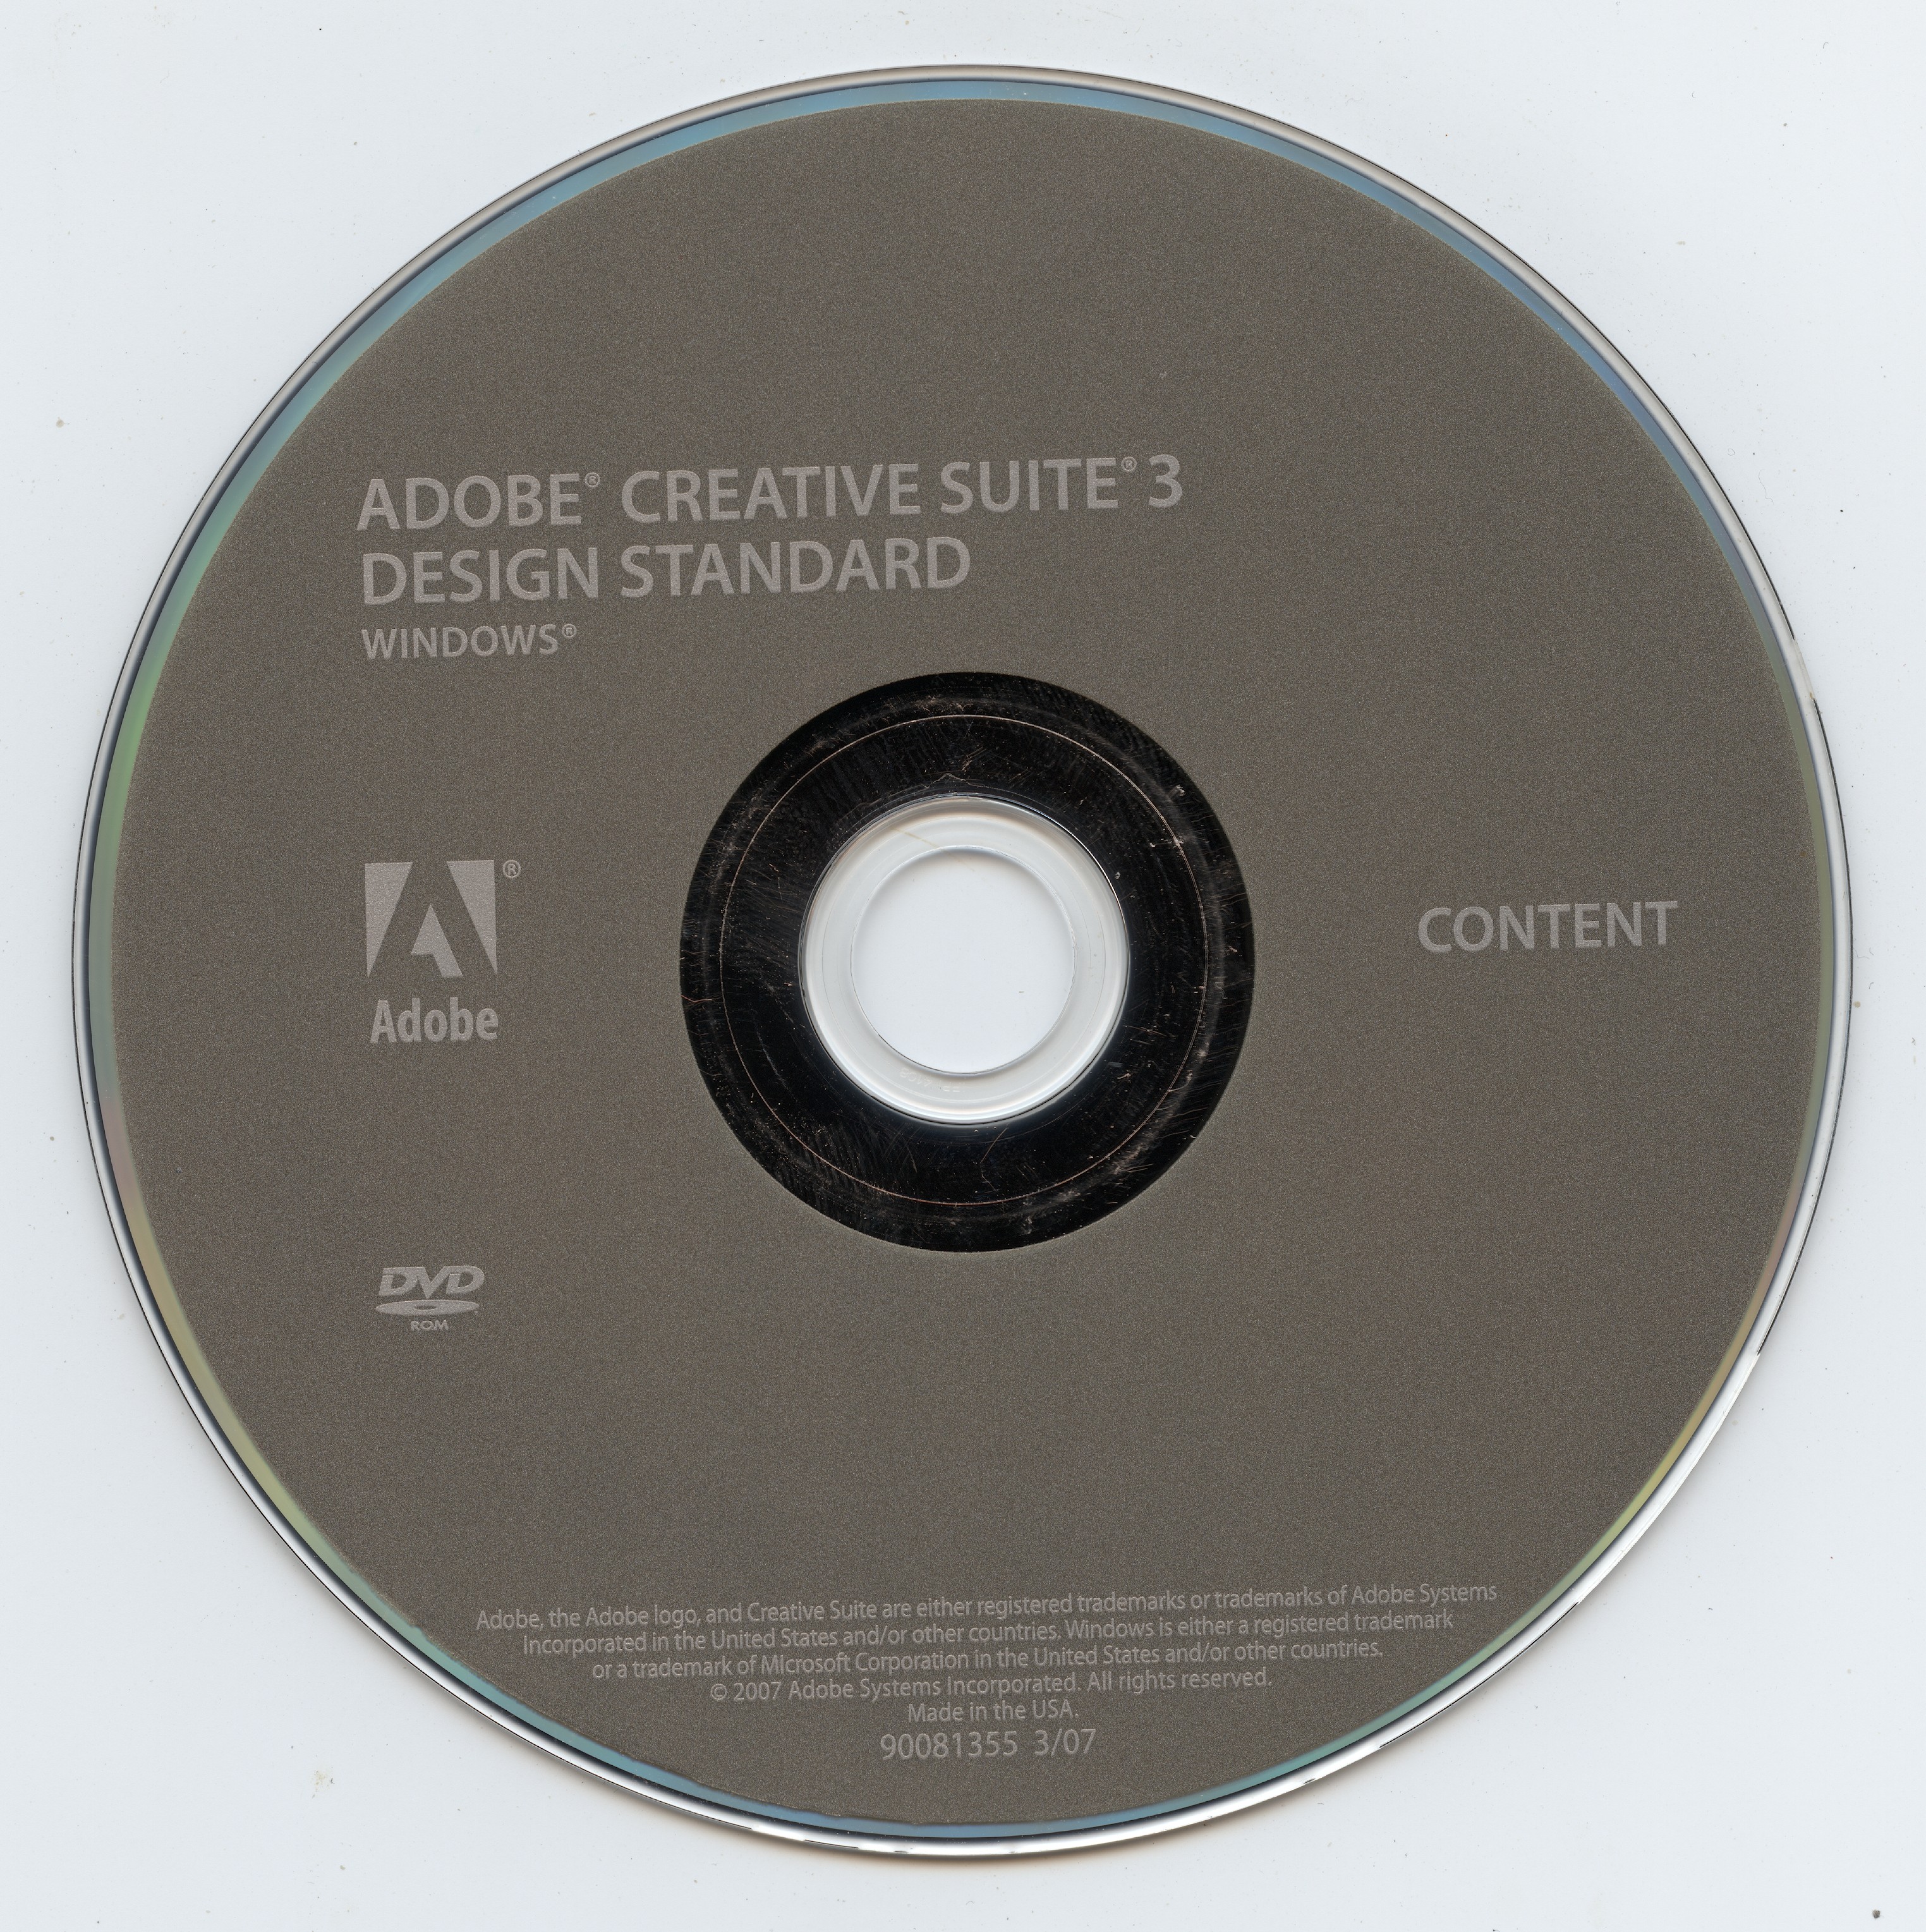 Adobe Creative Suite 3 Design Standard Content (90081355 3 07 